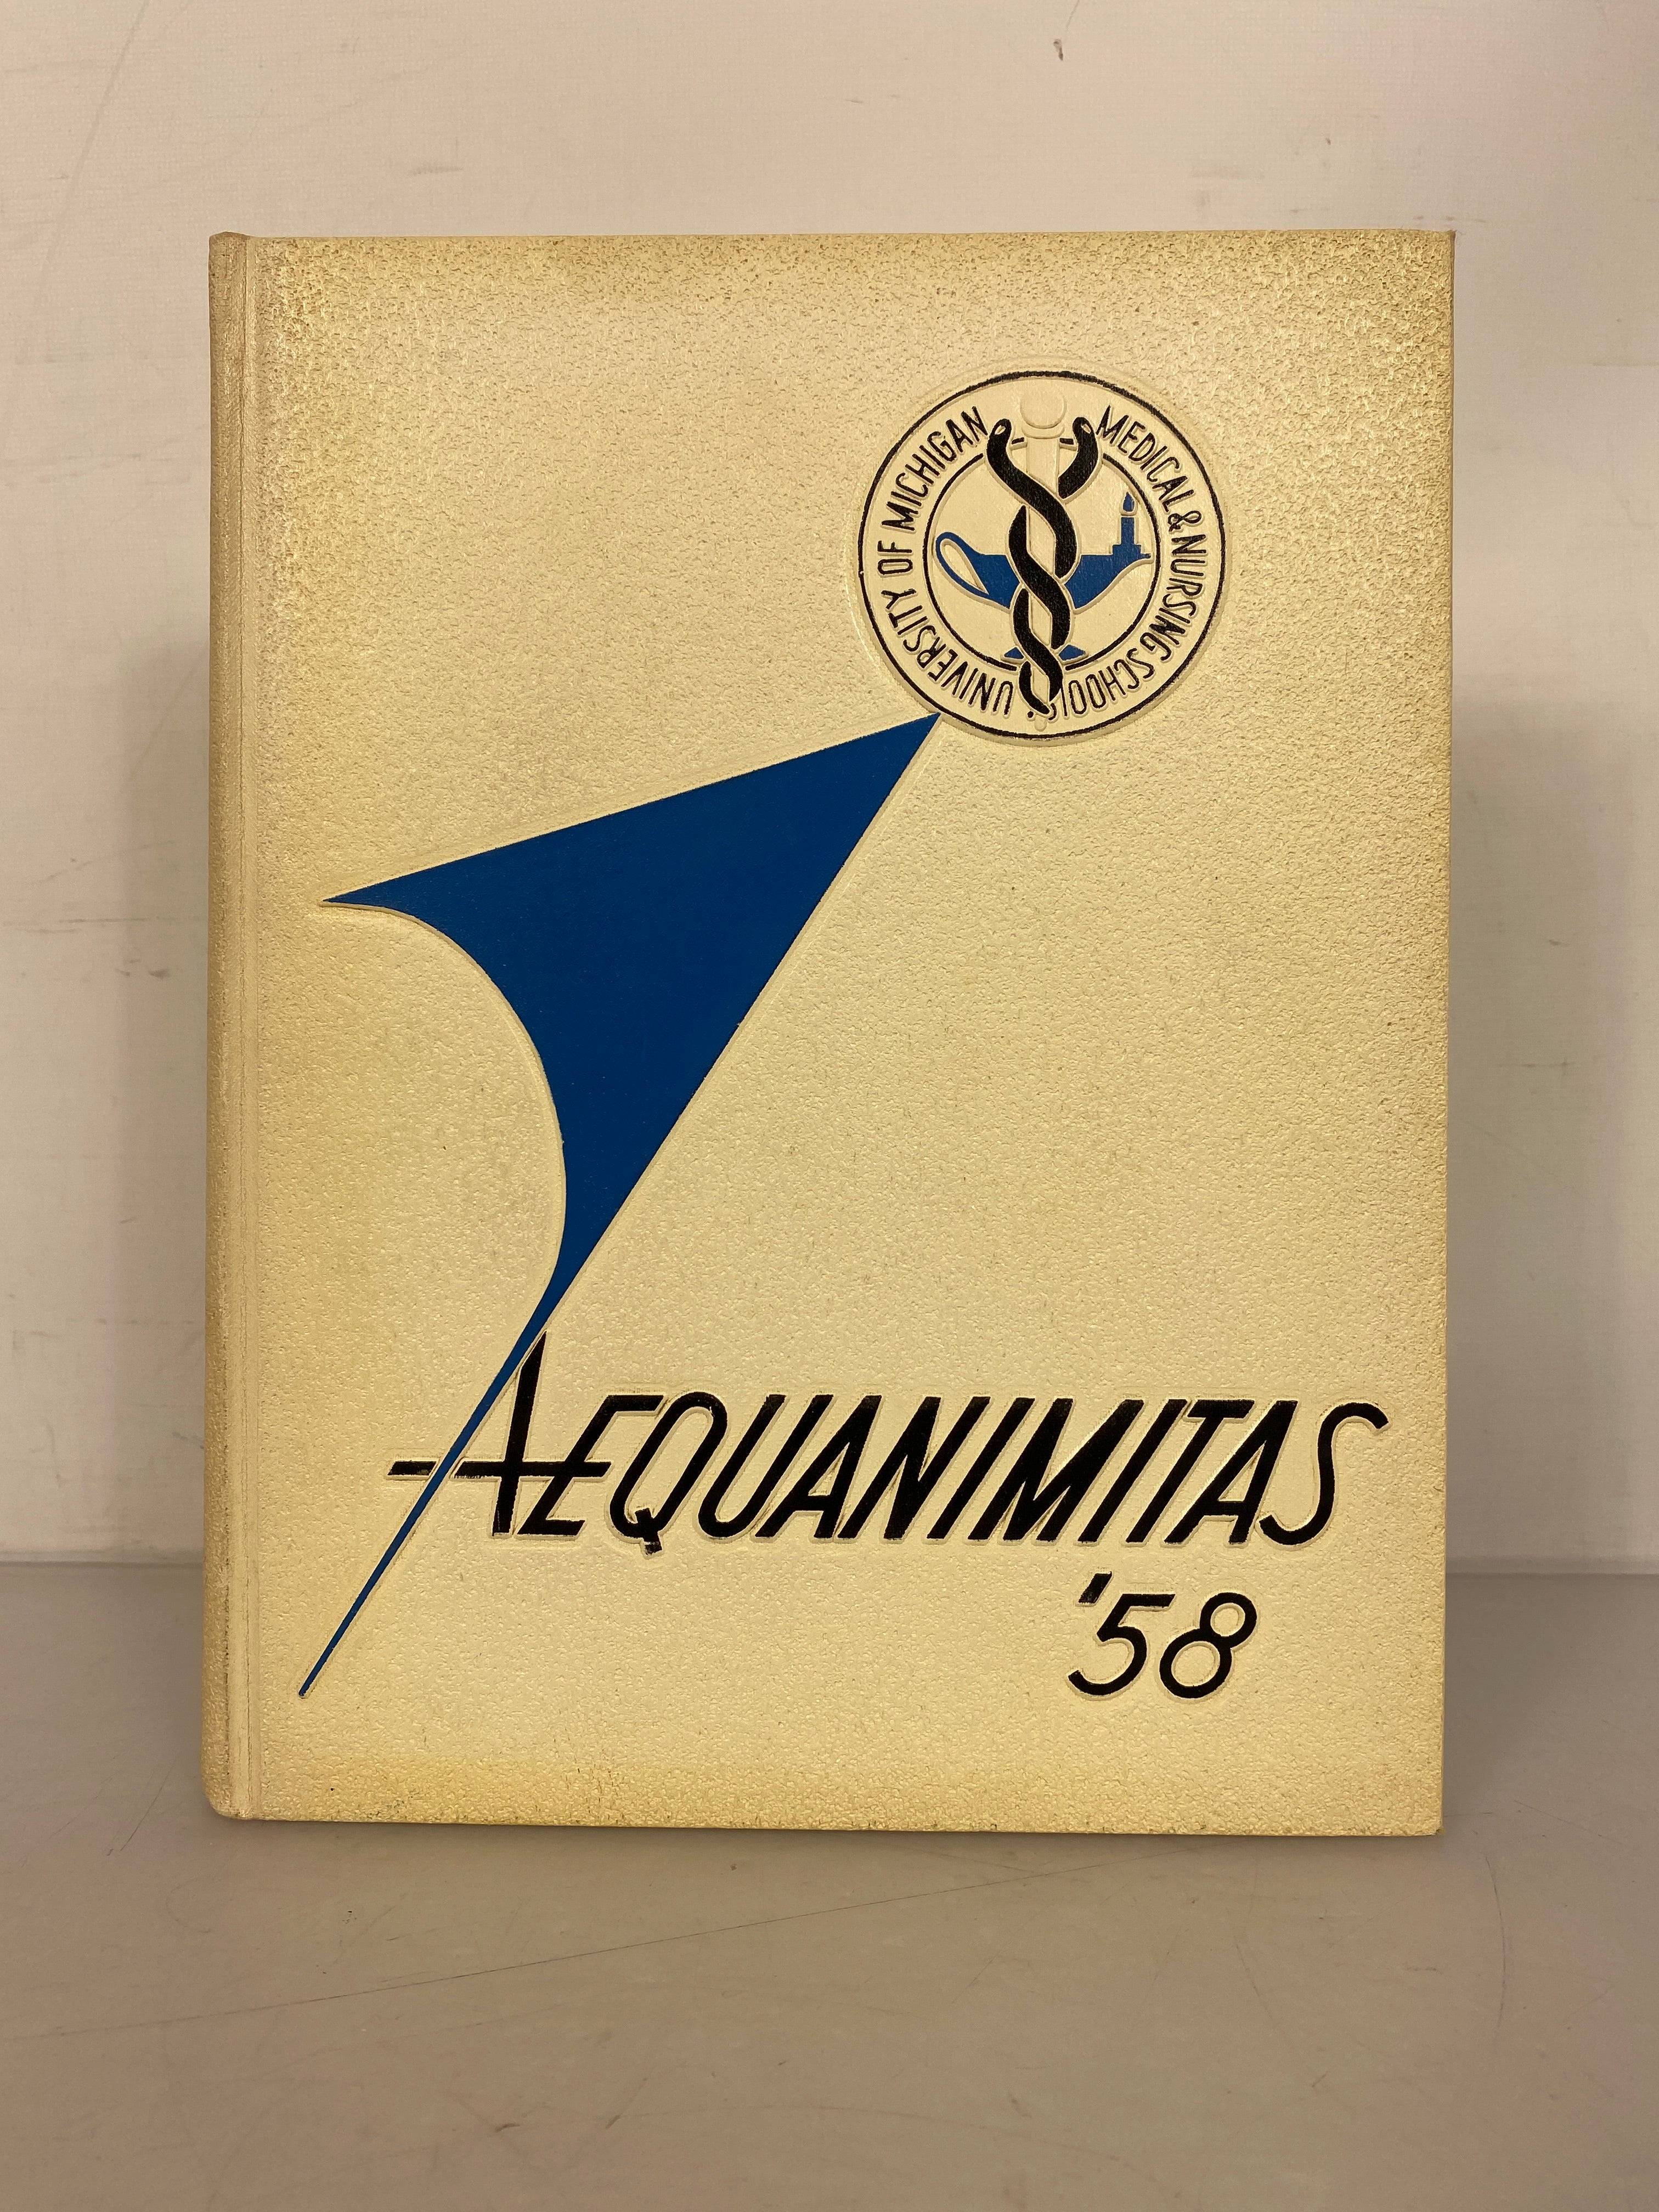 1958 University of Michigan Medical & Nursing School Yearbook "Aequanimitas"